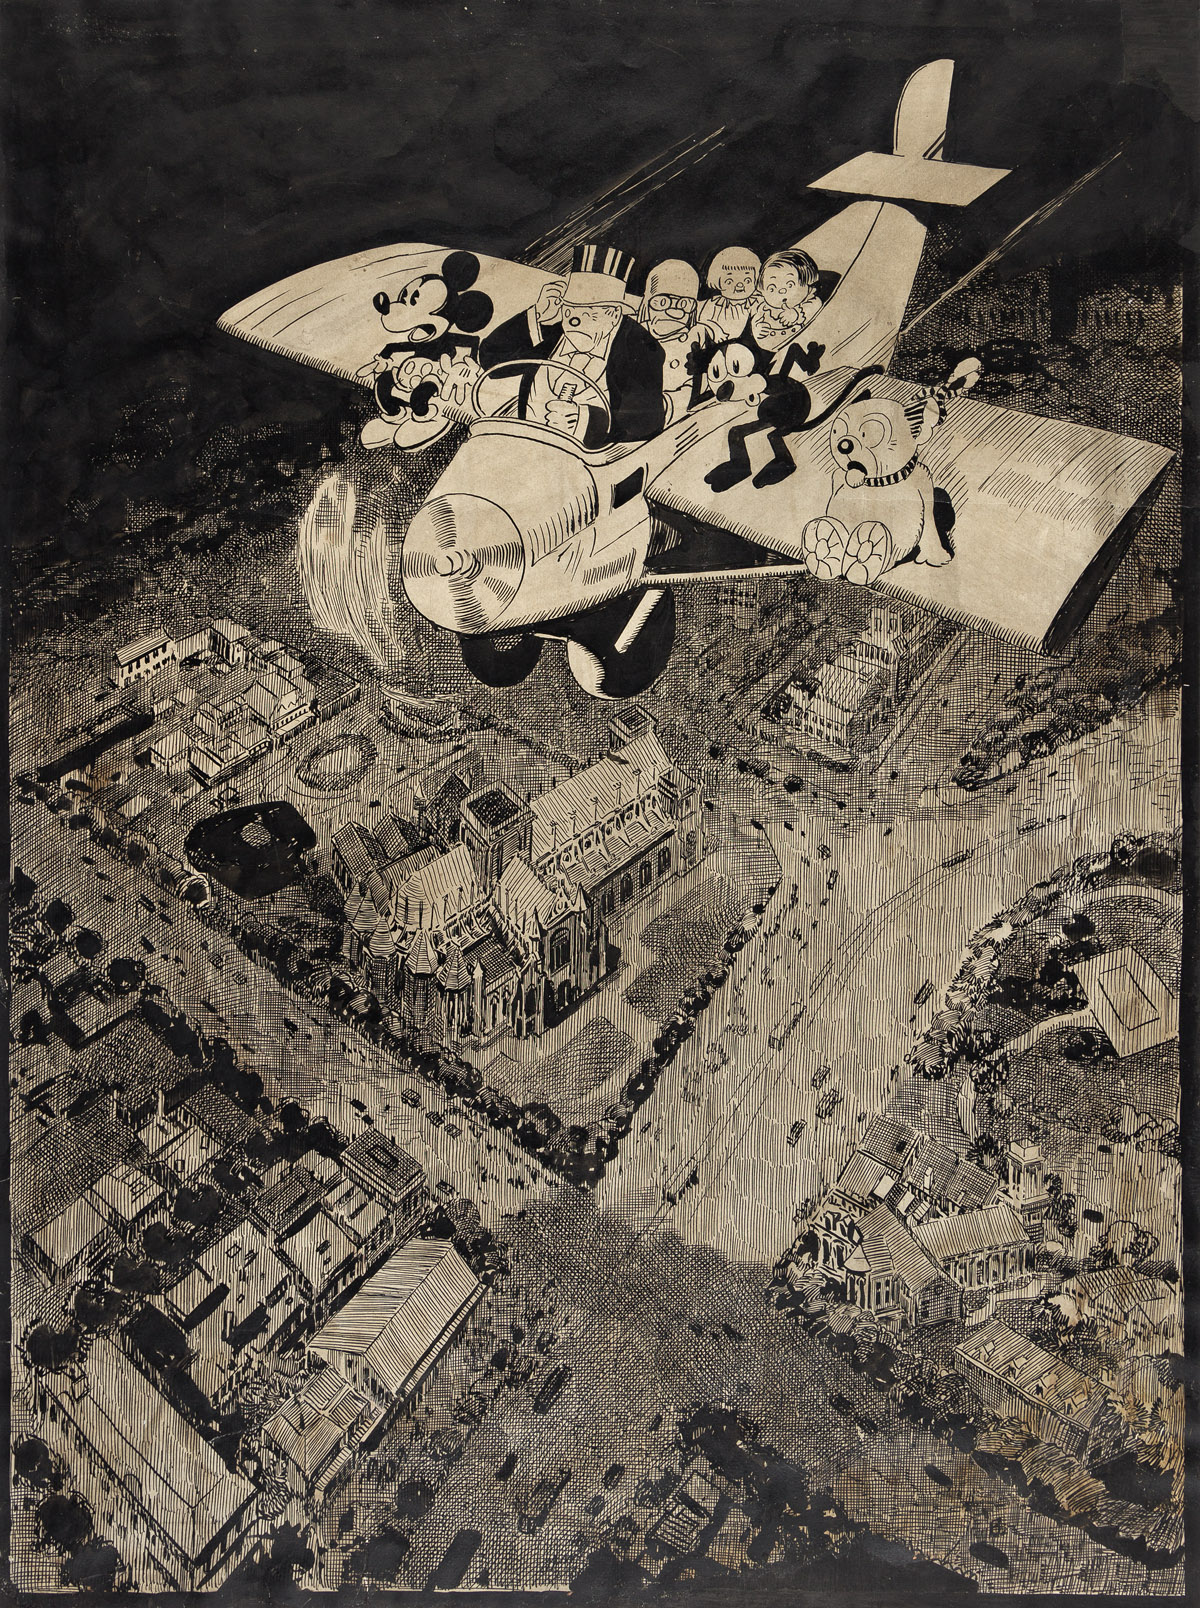 (DISNEY / KING FEATURES) LOUIS BIEDERMANN (1874-1957) Cartoon characters flying over a European city.